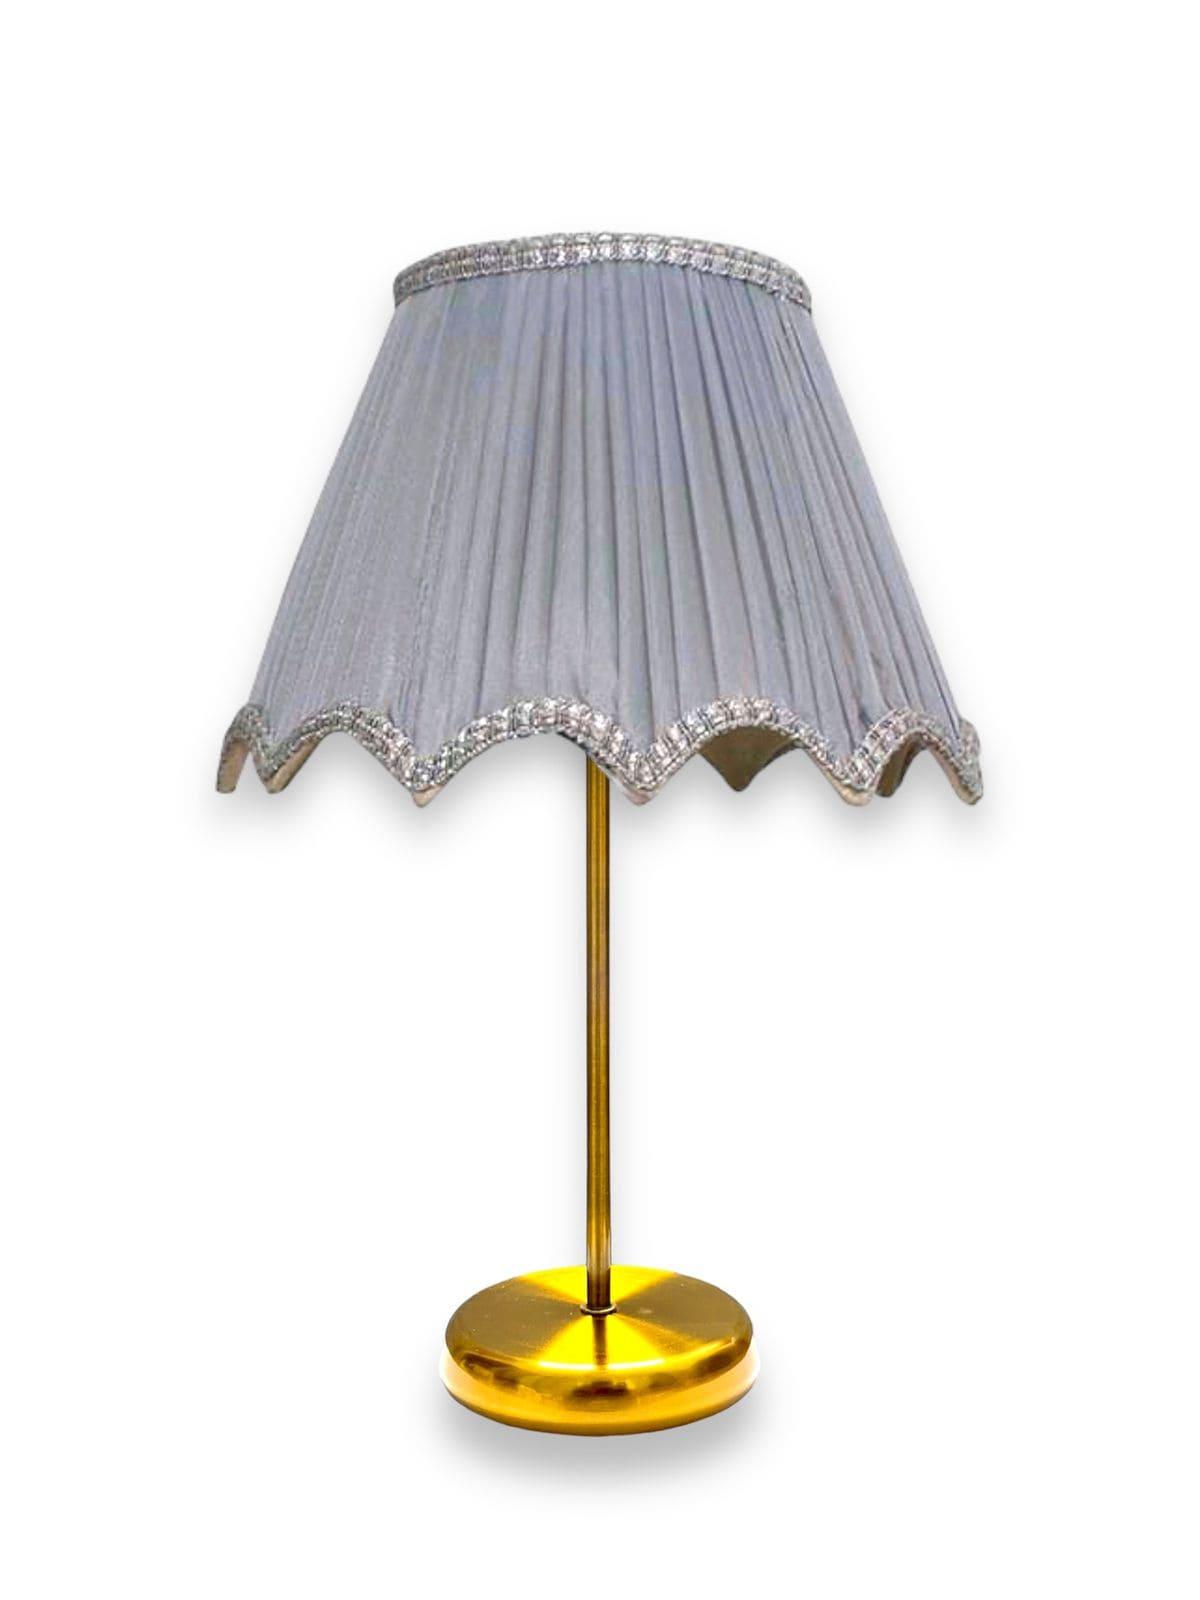 Dot Light - Golden Steel Table Lamp With Gray Shade 50×30 - DotGTL-50302